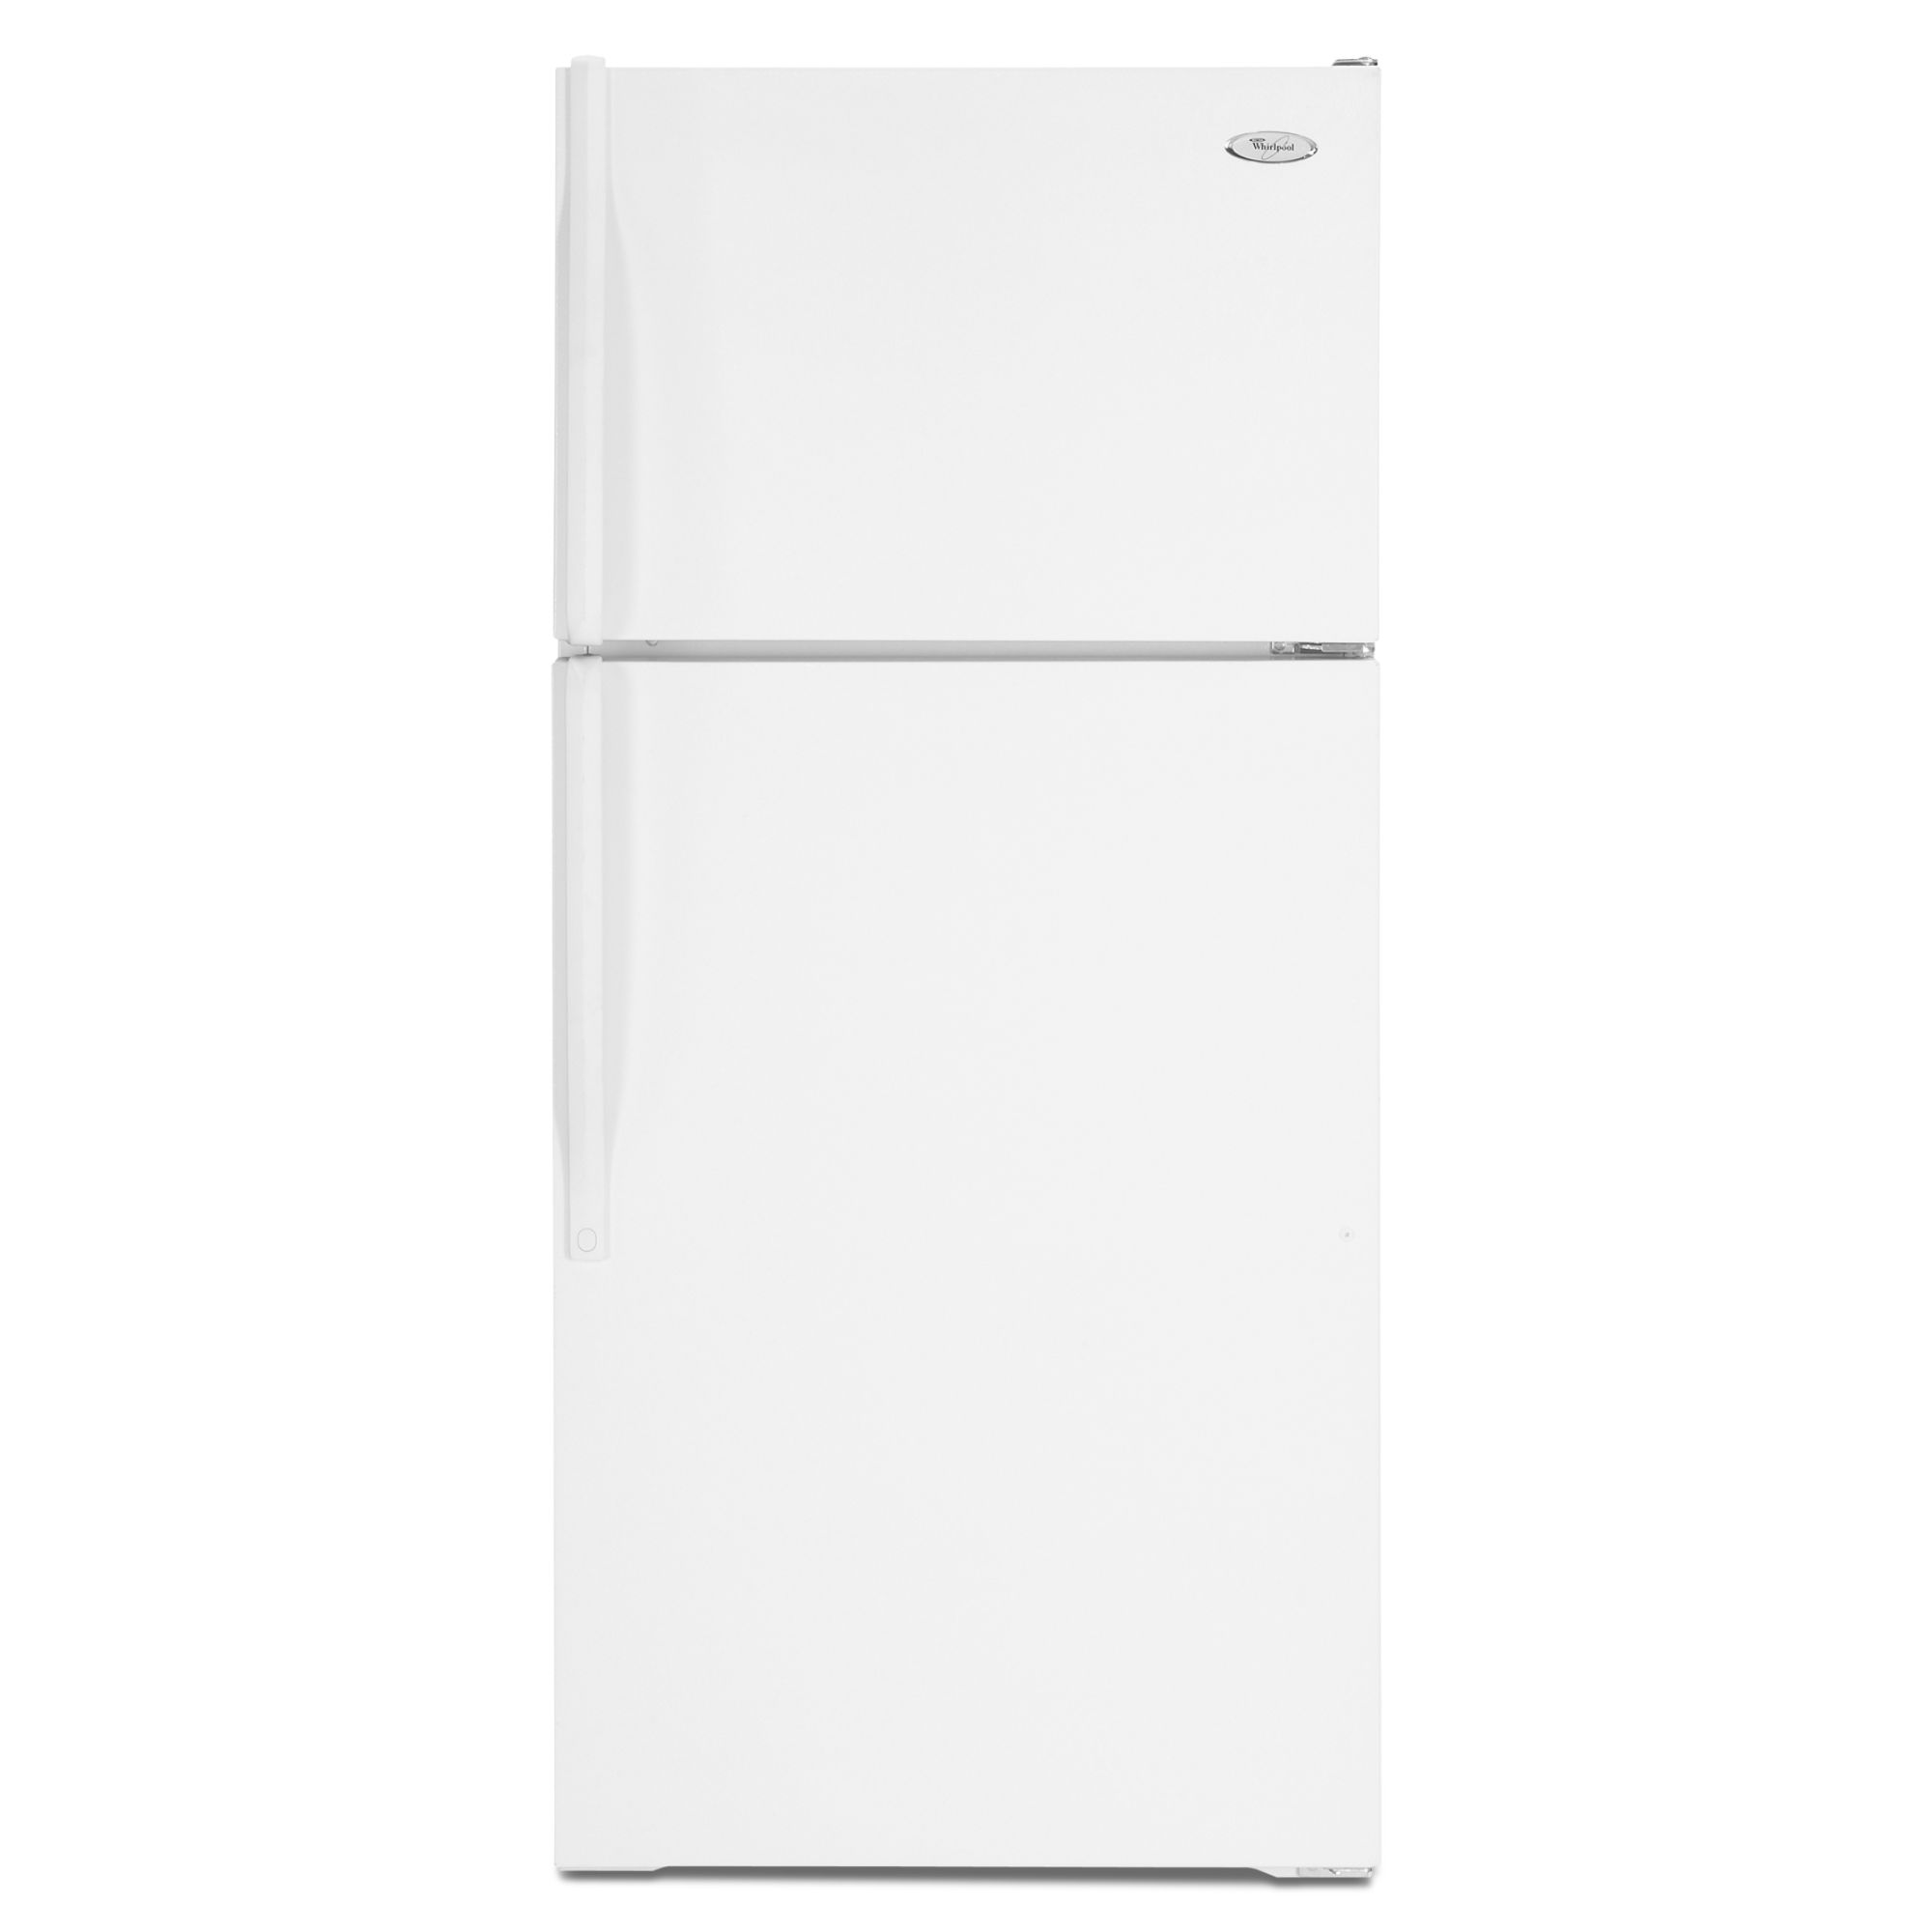 Whirlpool 14.6 cu. ft. Top-Freezer Refrigerator - White